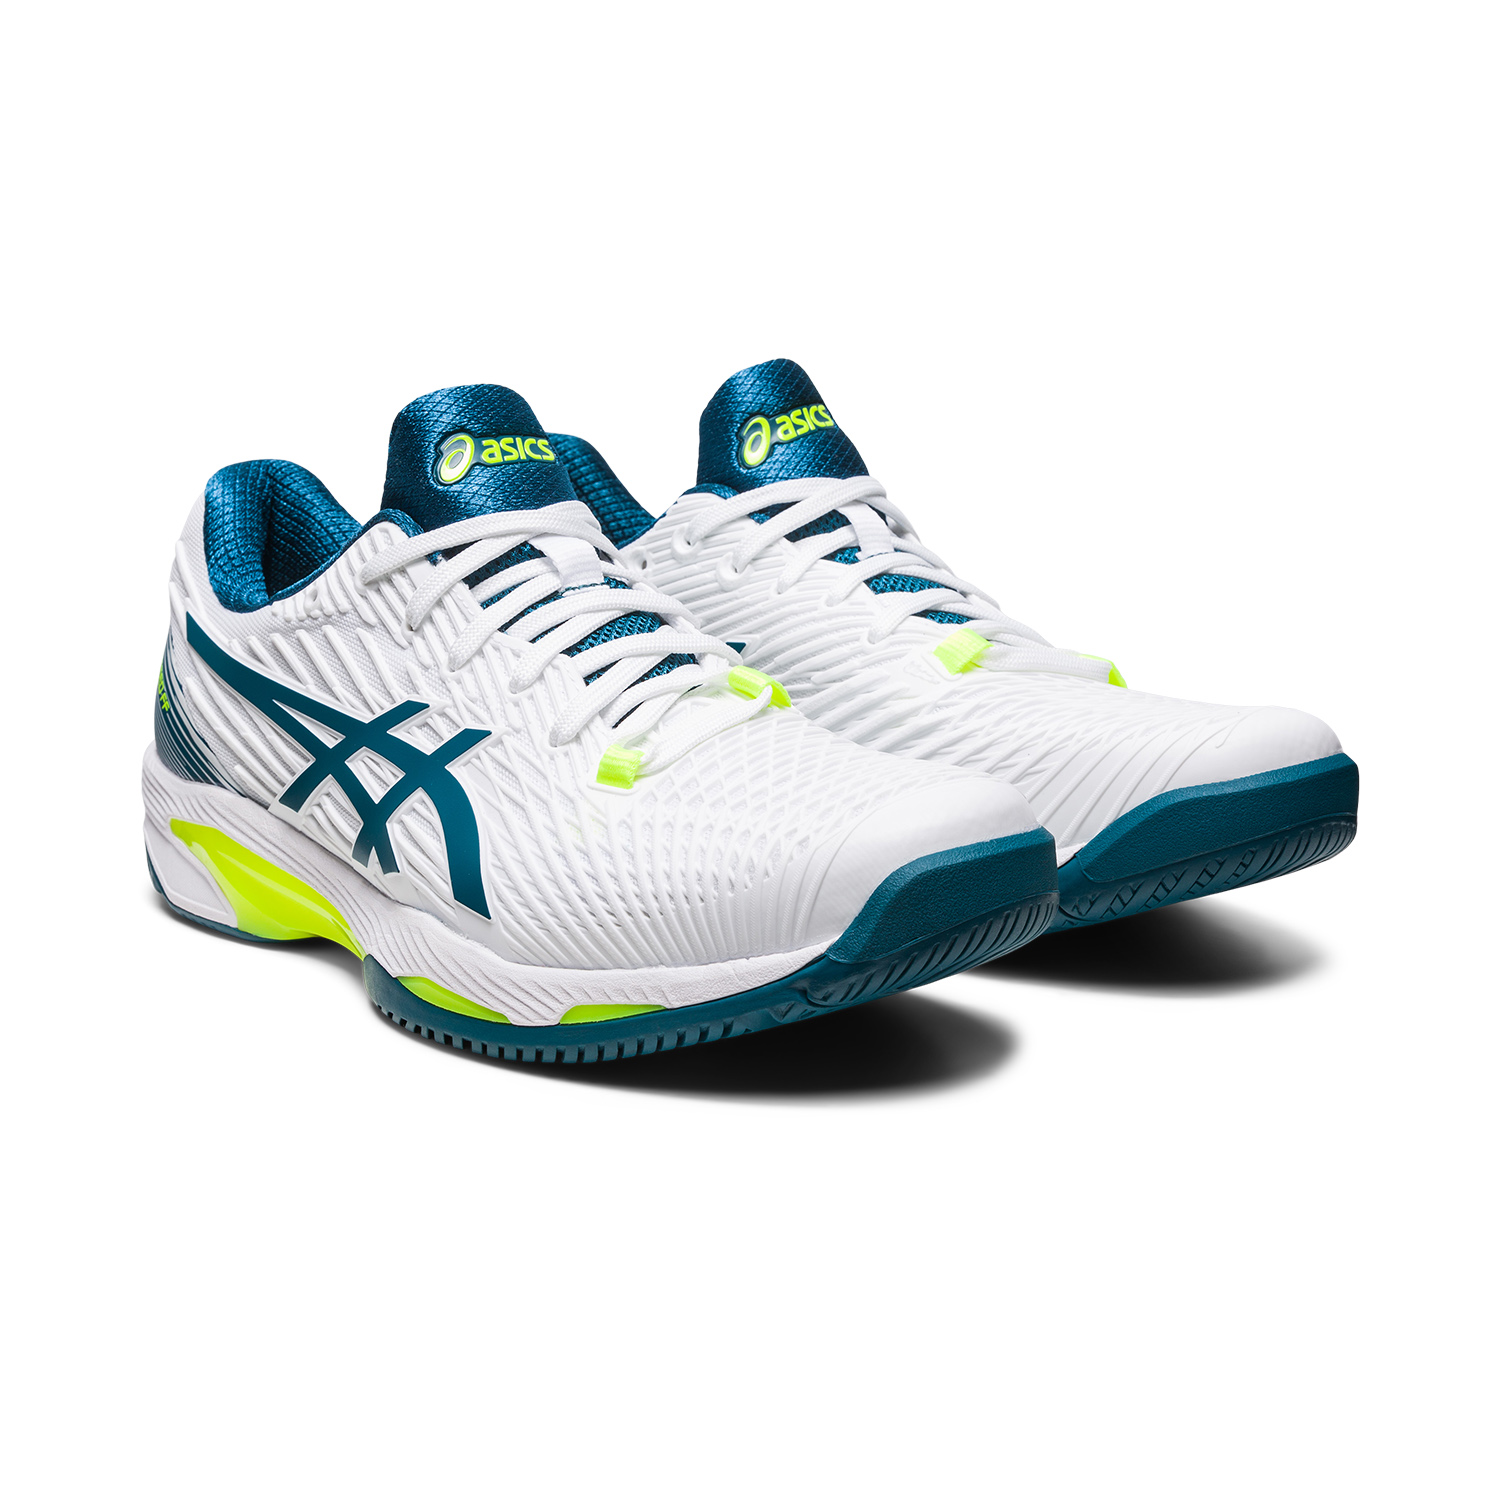 Asics Solution Speed FF 2 Men's Tennis Shoes - White